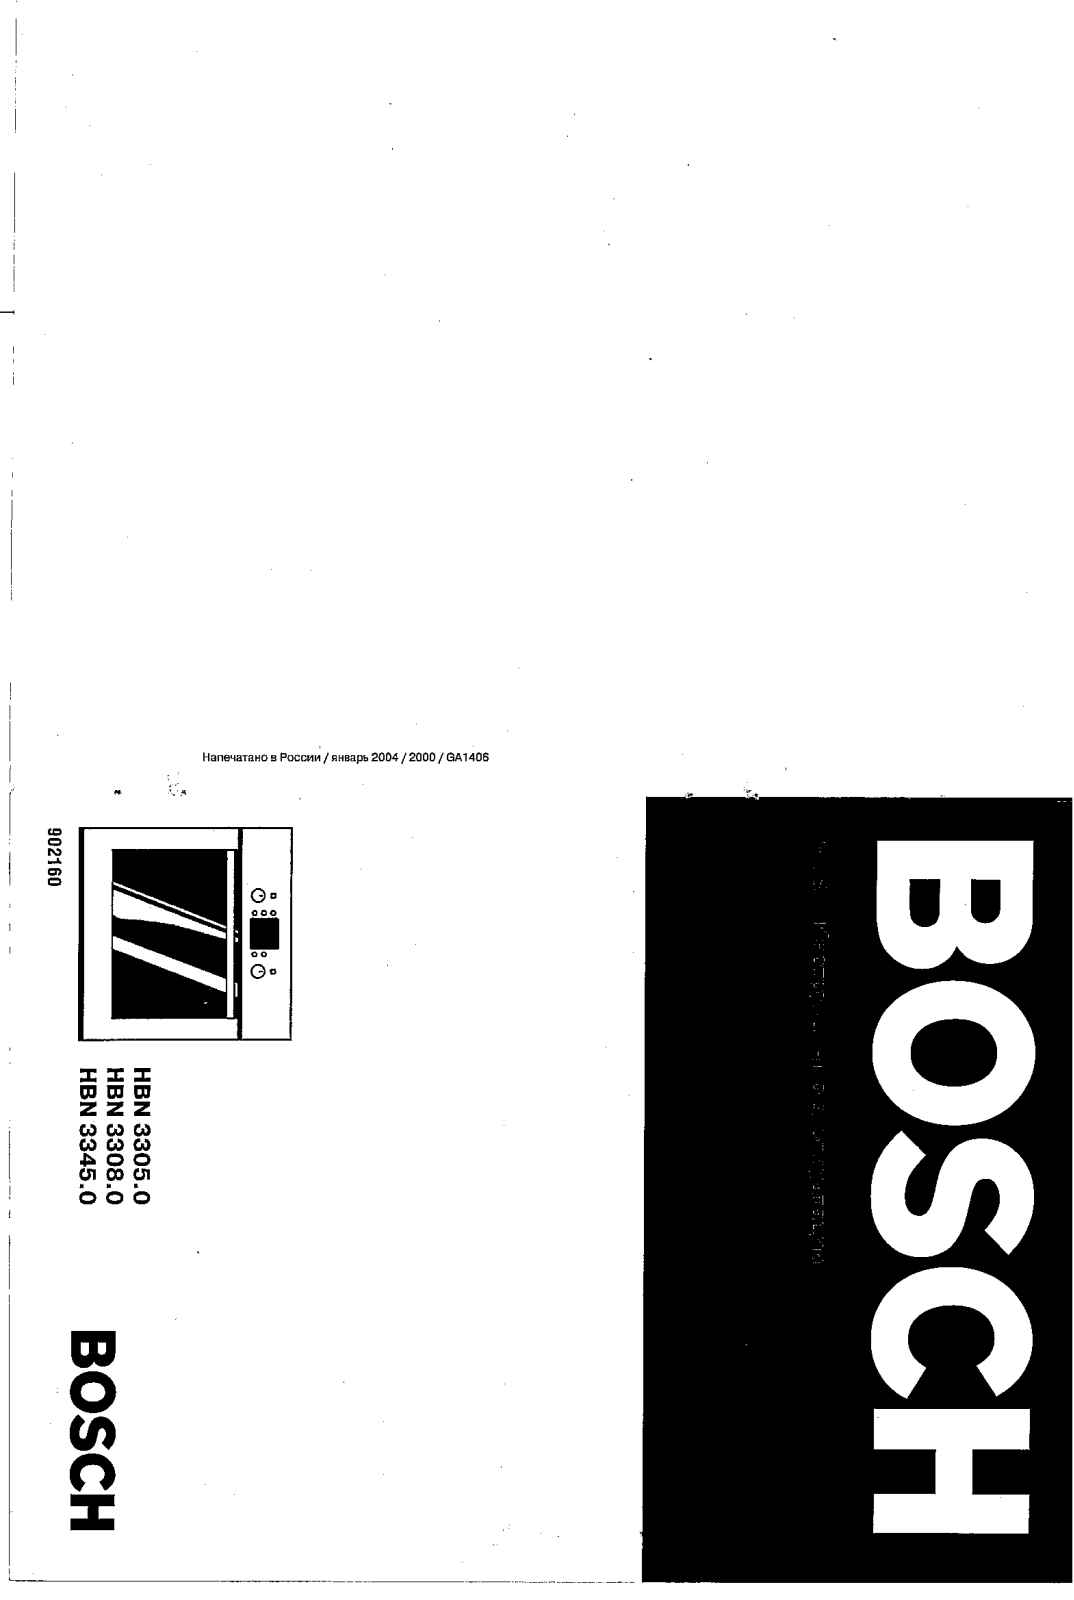 Bosch HBN3305.0, HBN3308.0 User Manual